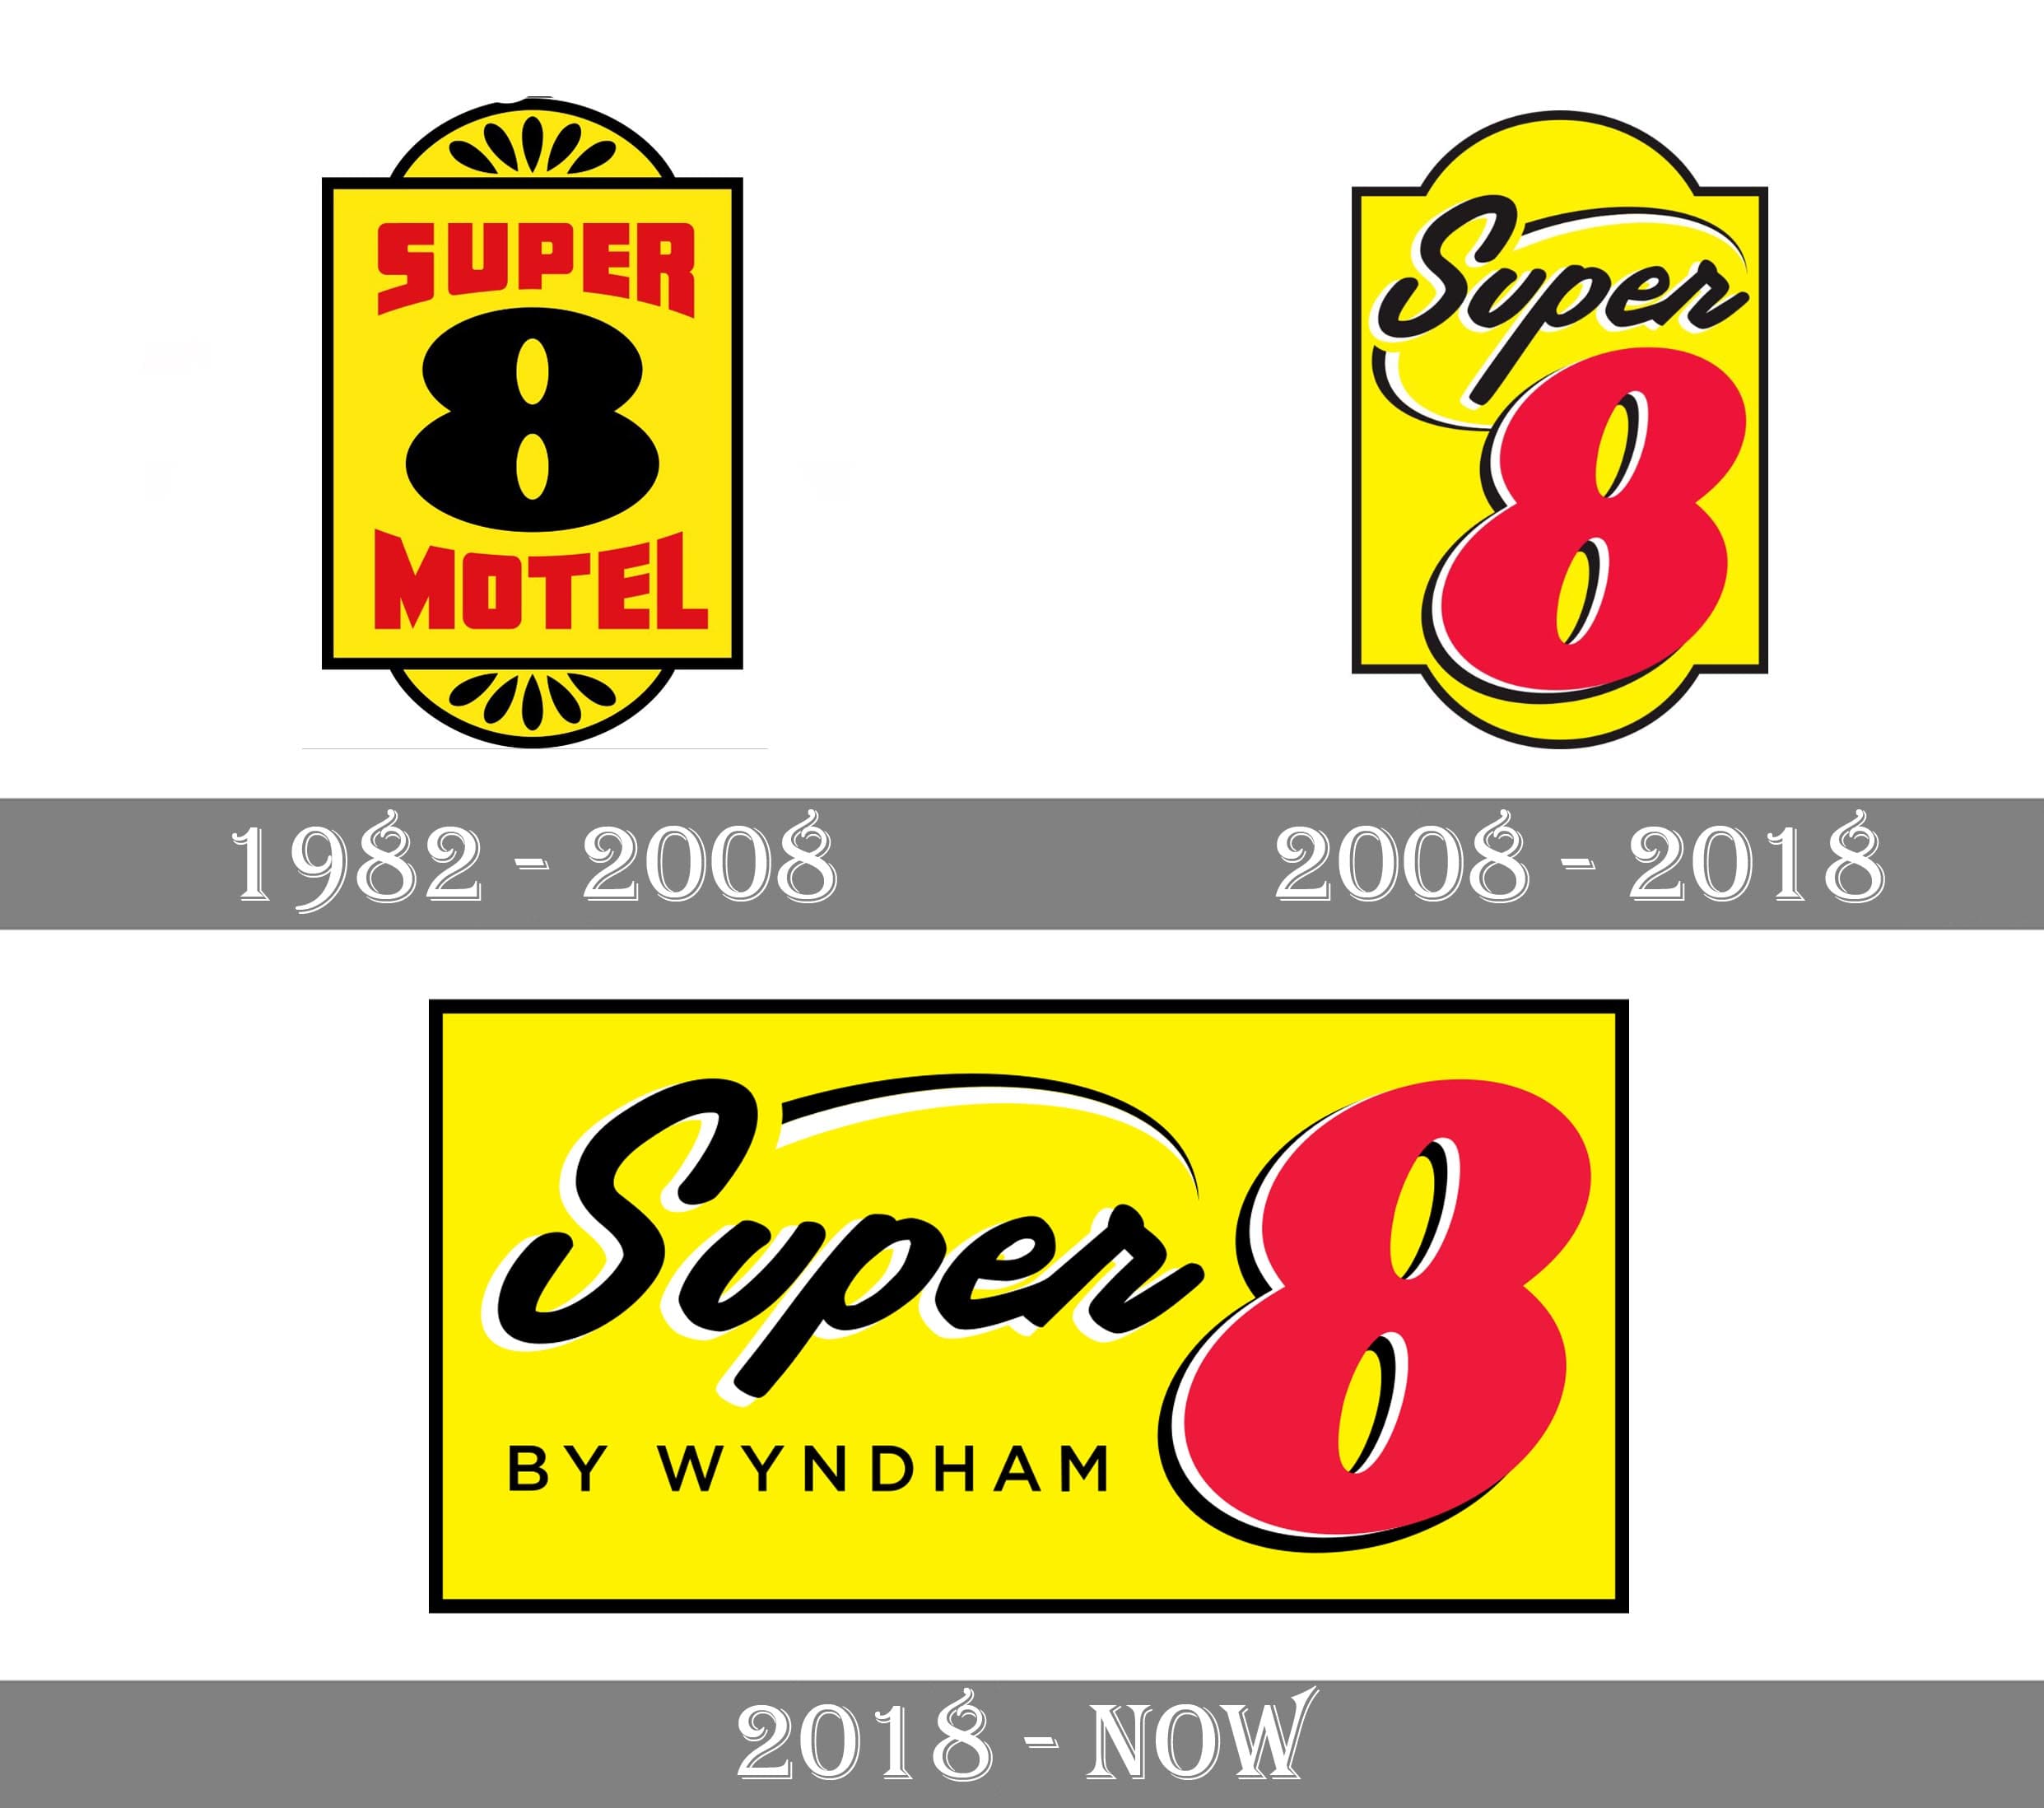 File:Super 8 logo.jpg - Wikimedia Commons